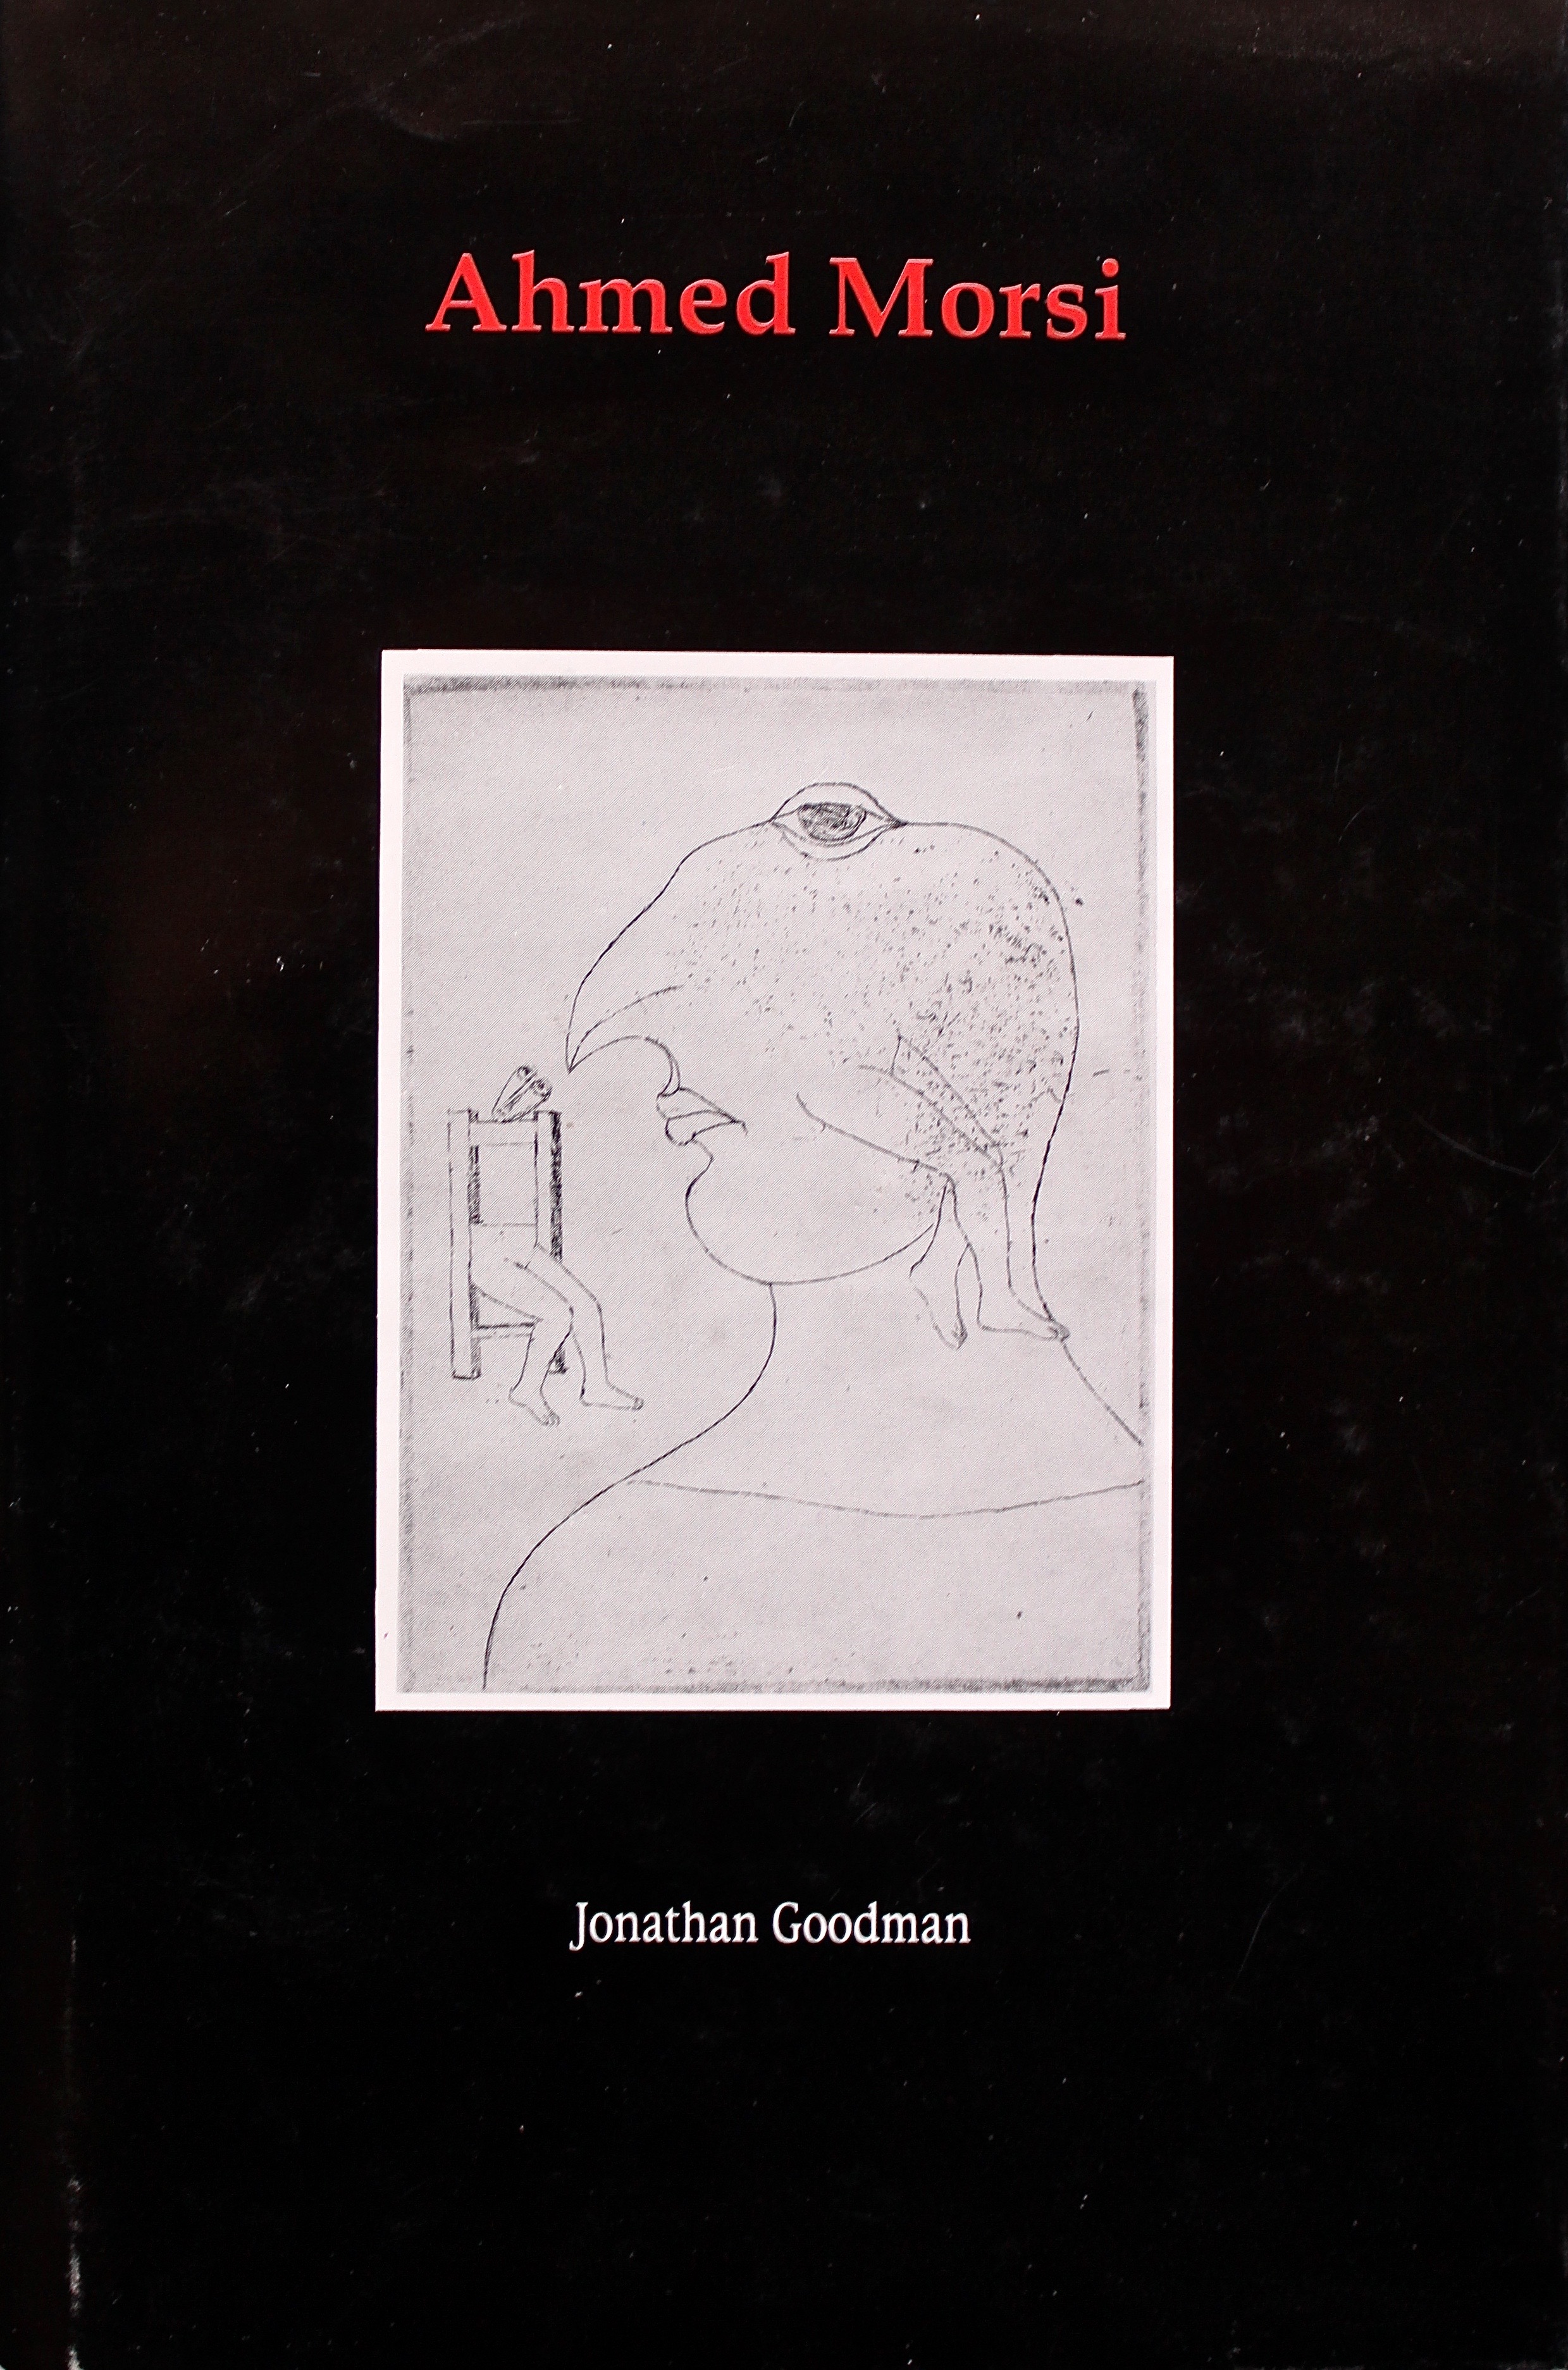 Introduction by Jonathan Goodman